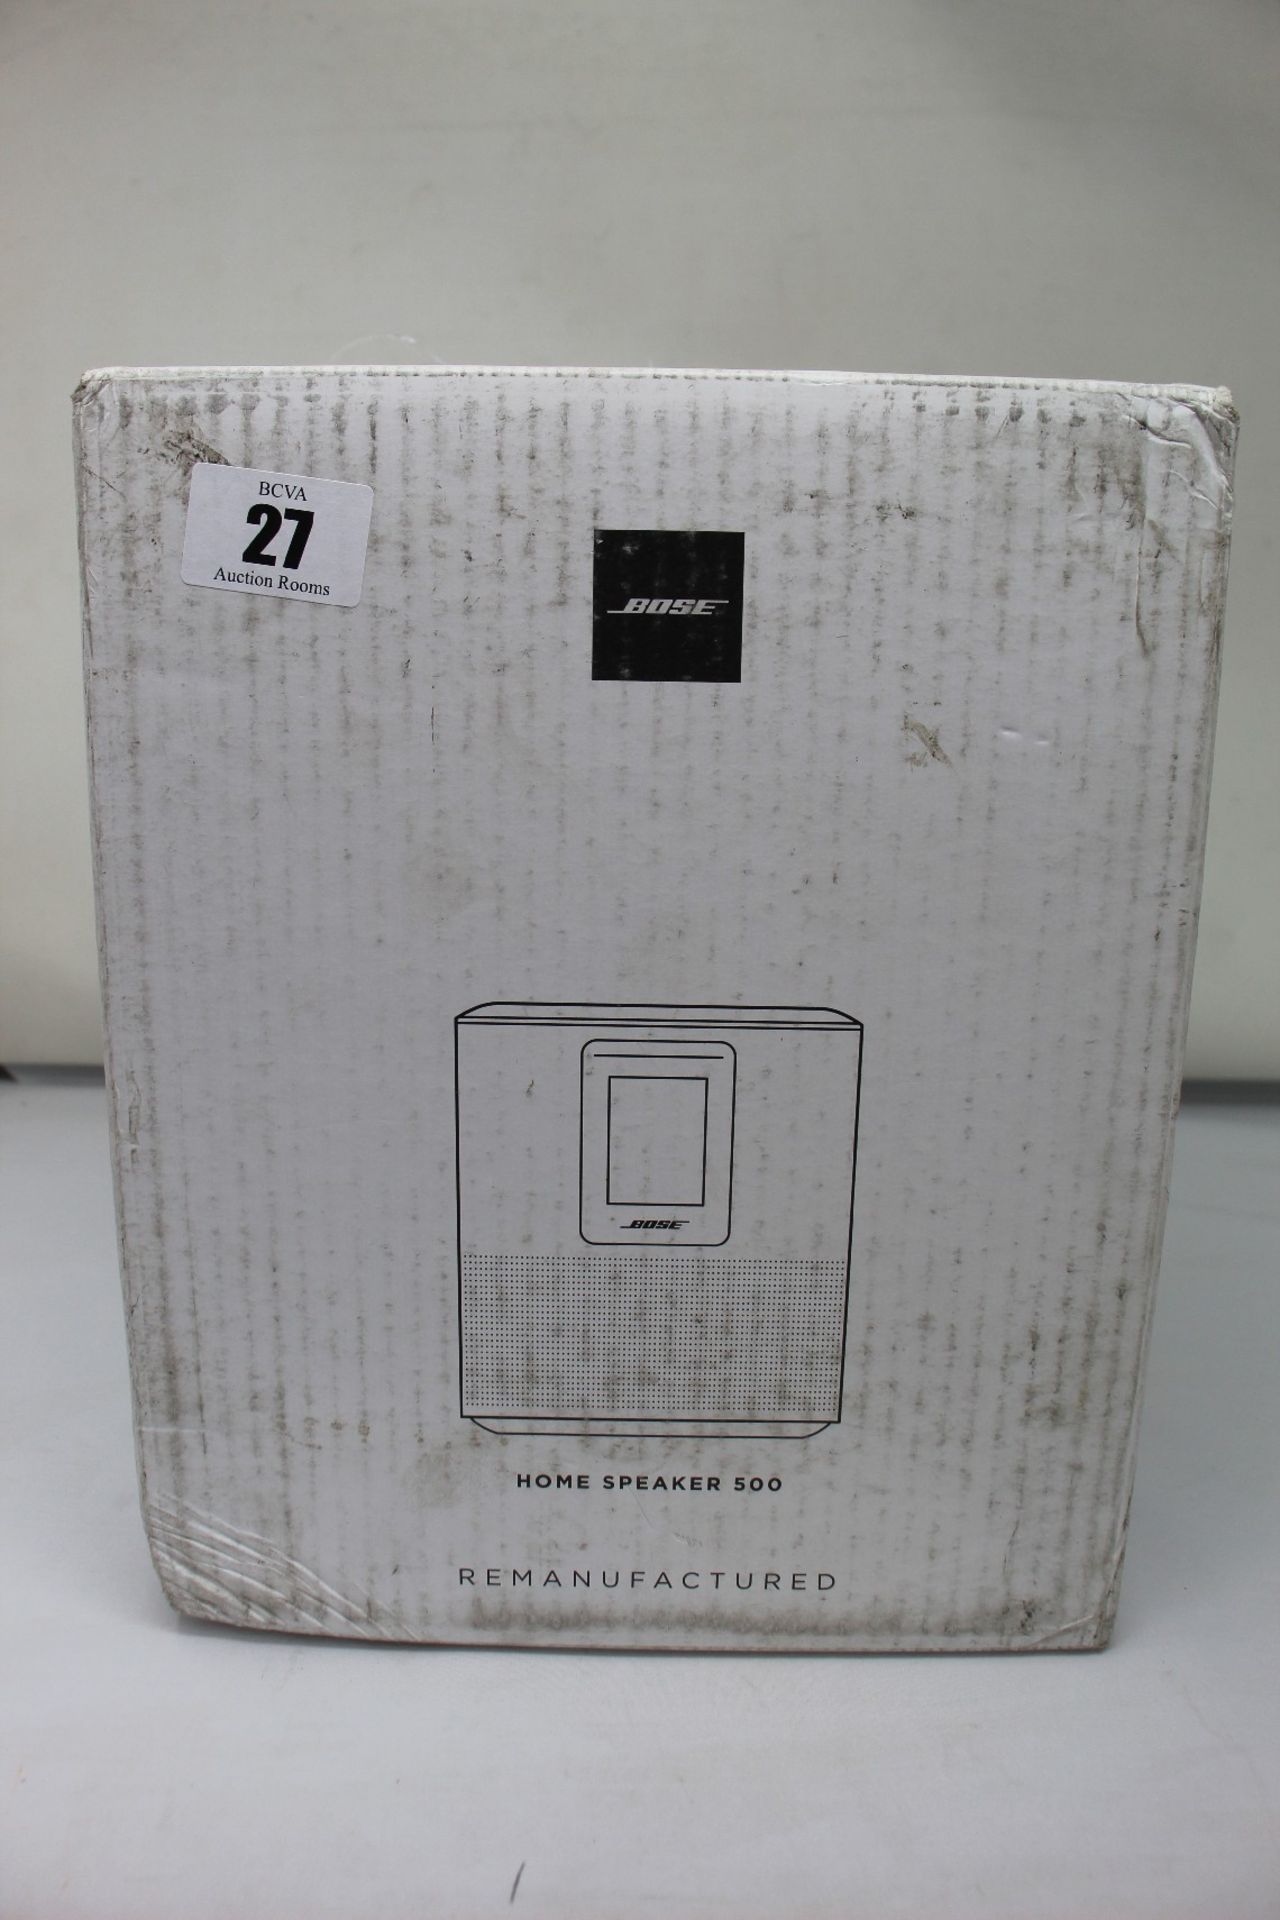 A Bose Home Speaker 500 (Remanufactured).